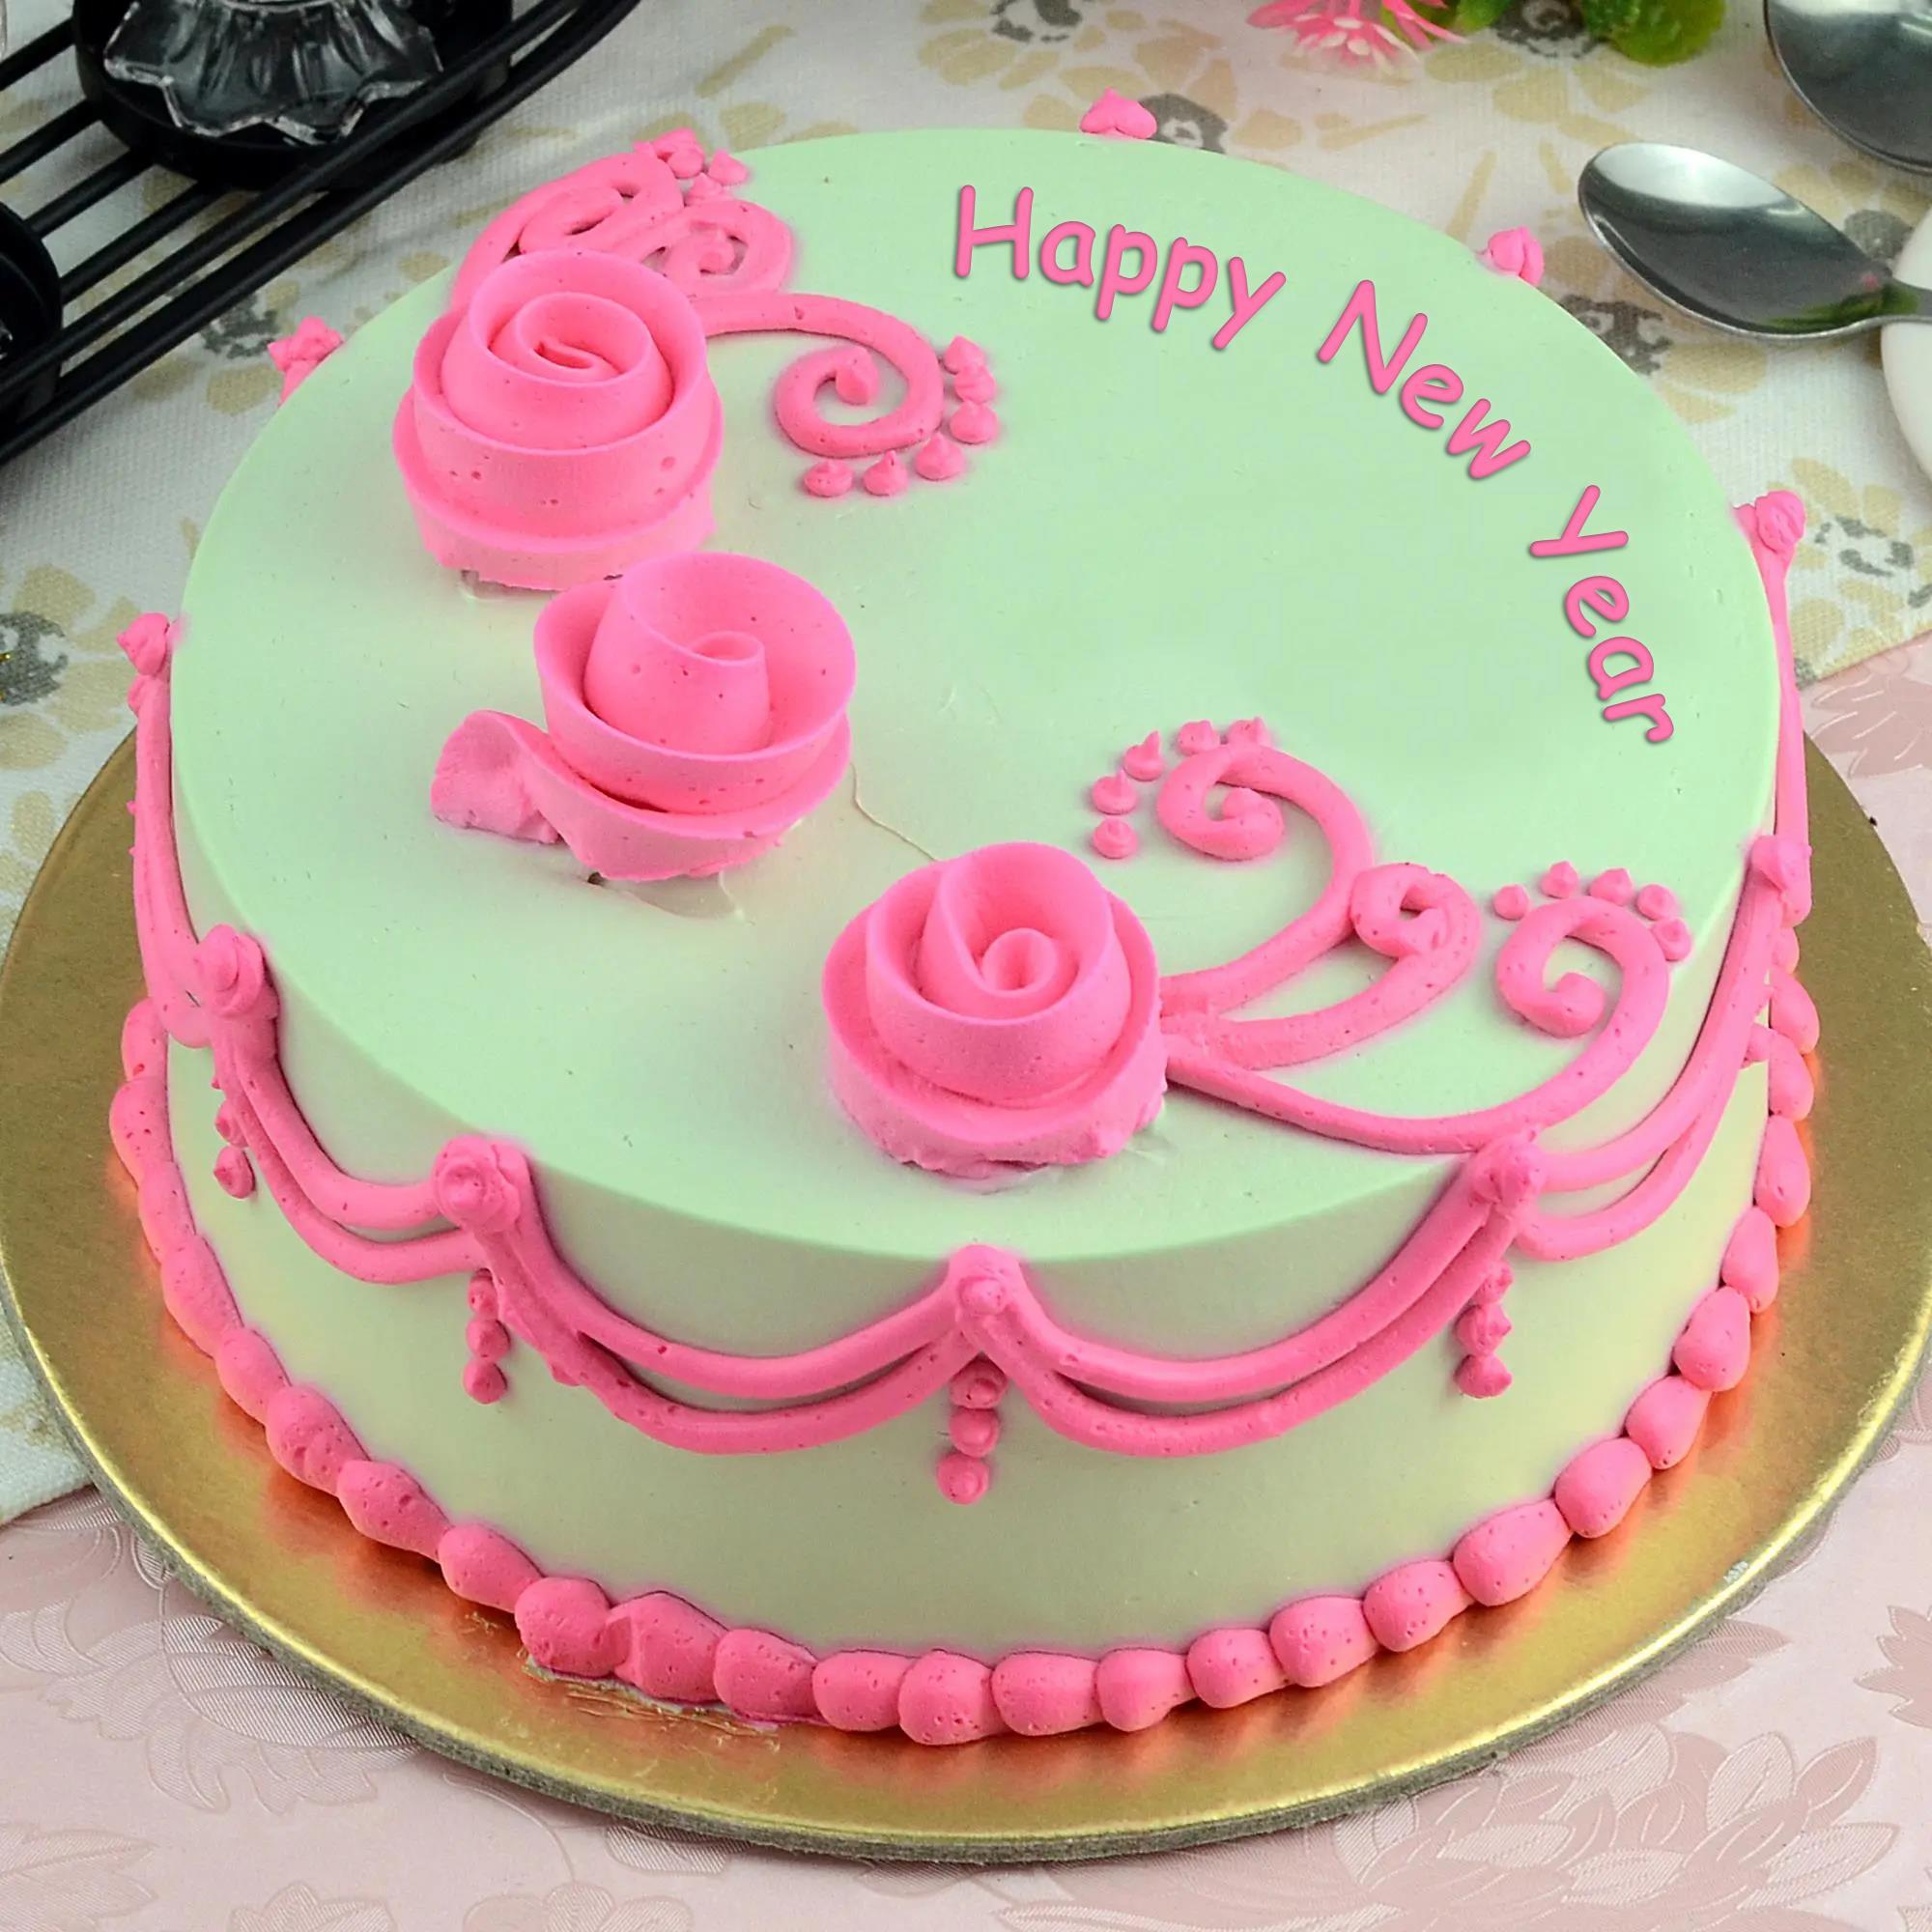 HAPPY NEW YEAR CAKE - Rashmi's Bakery